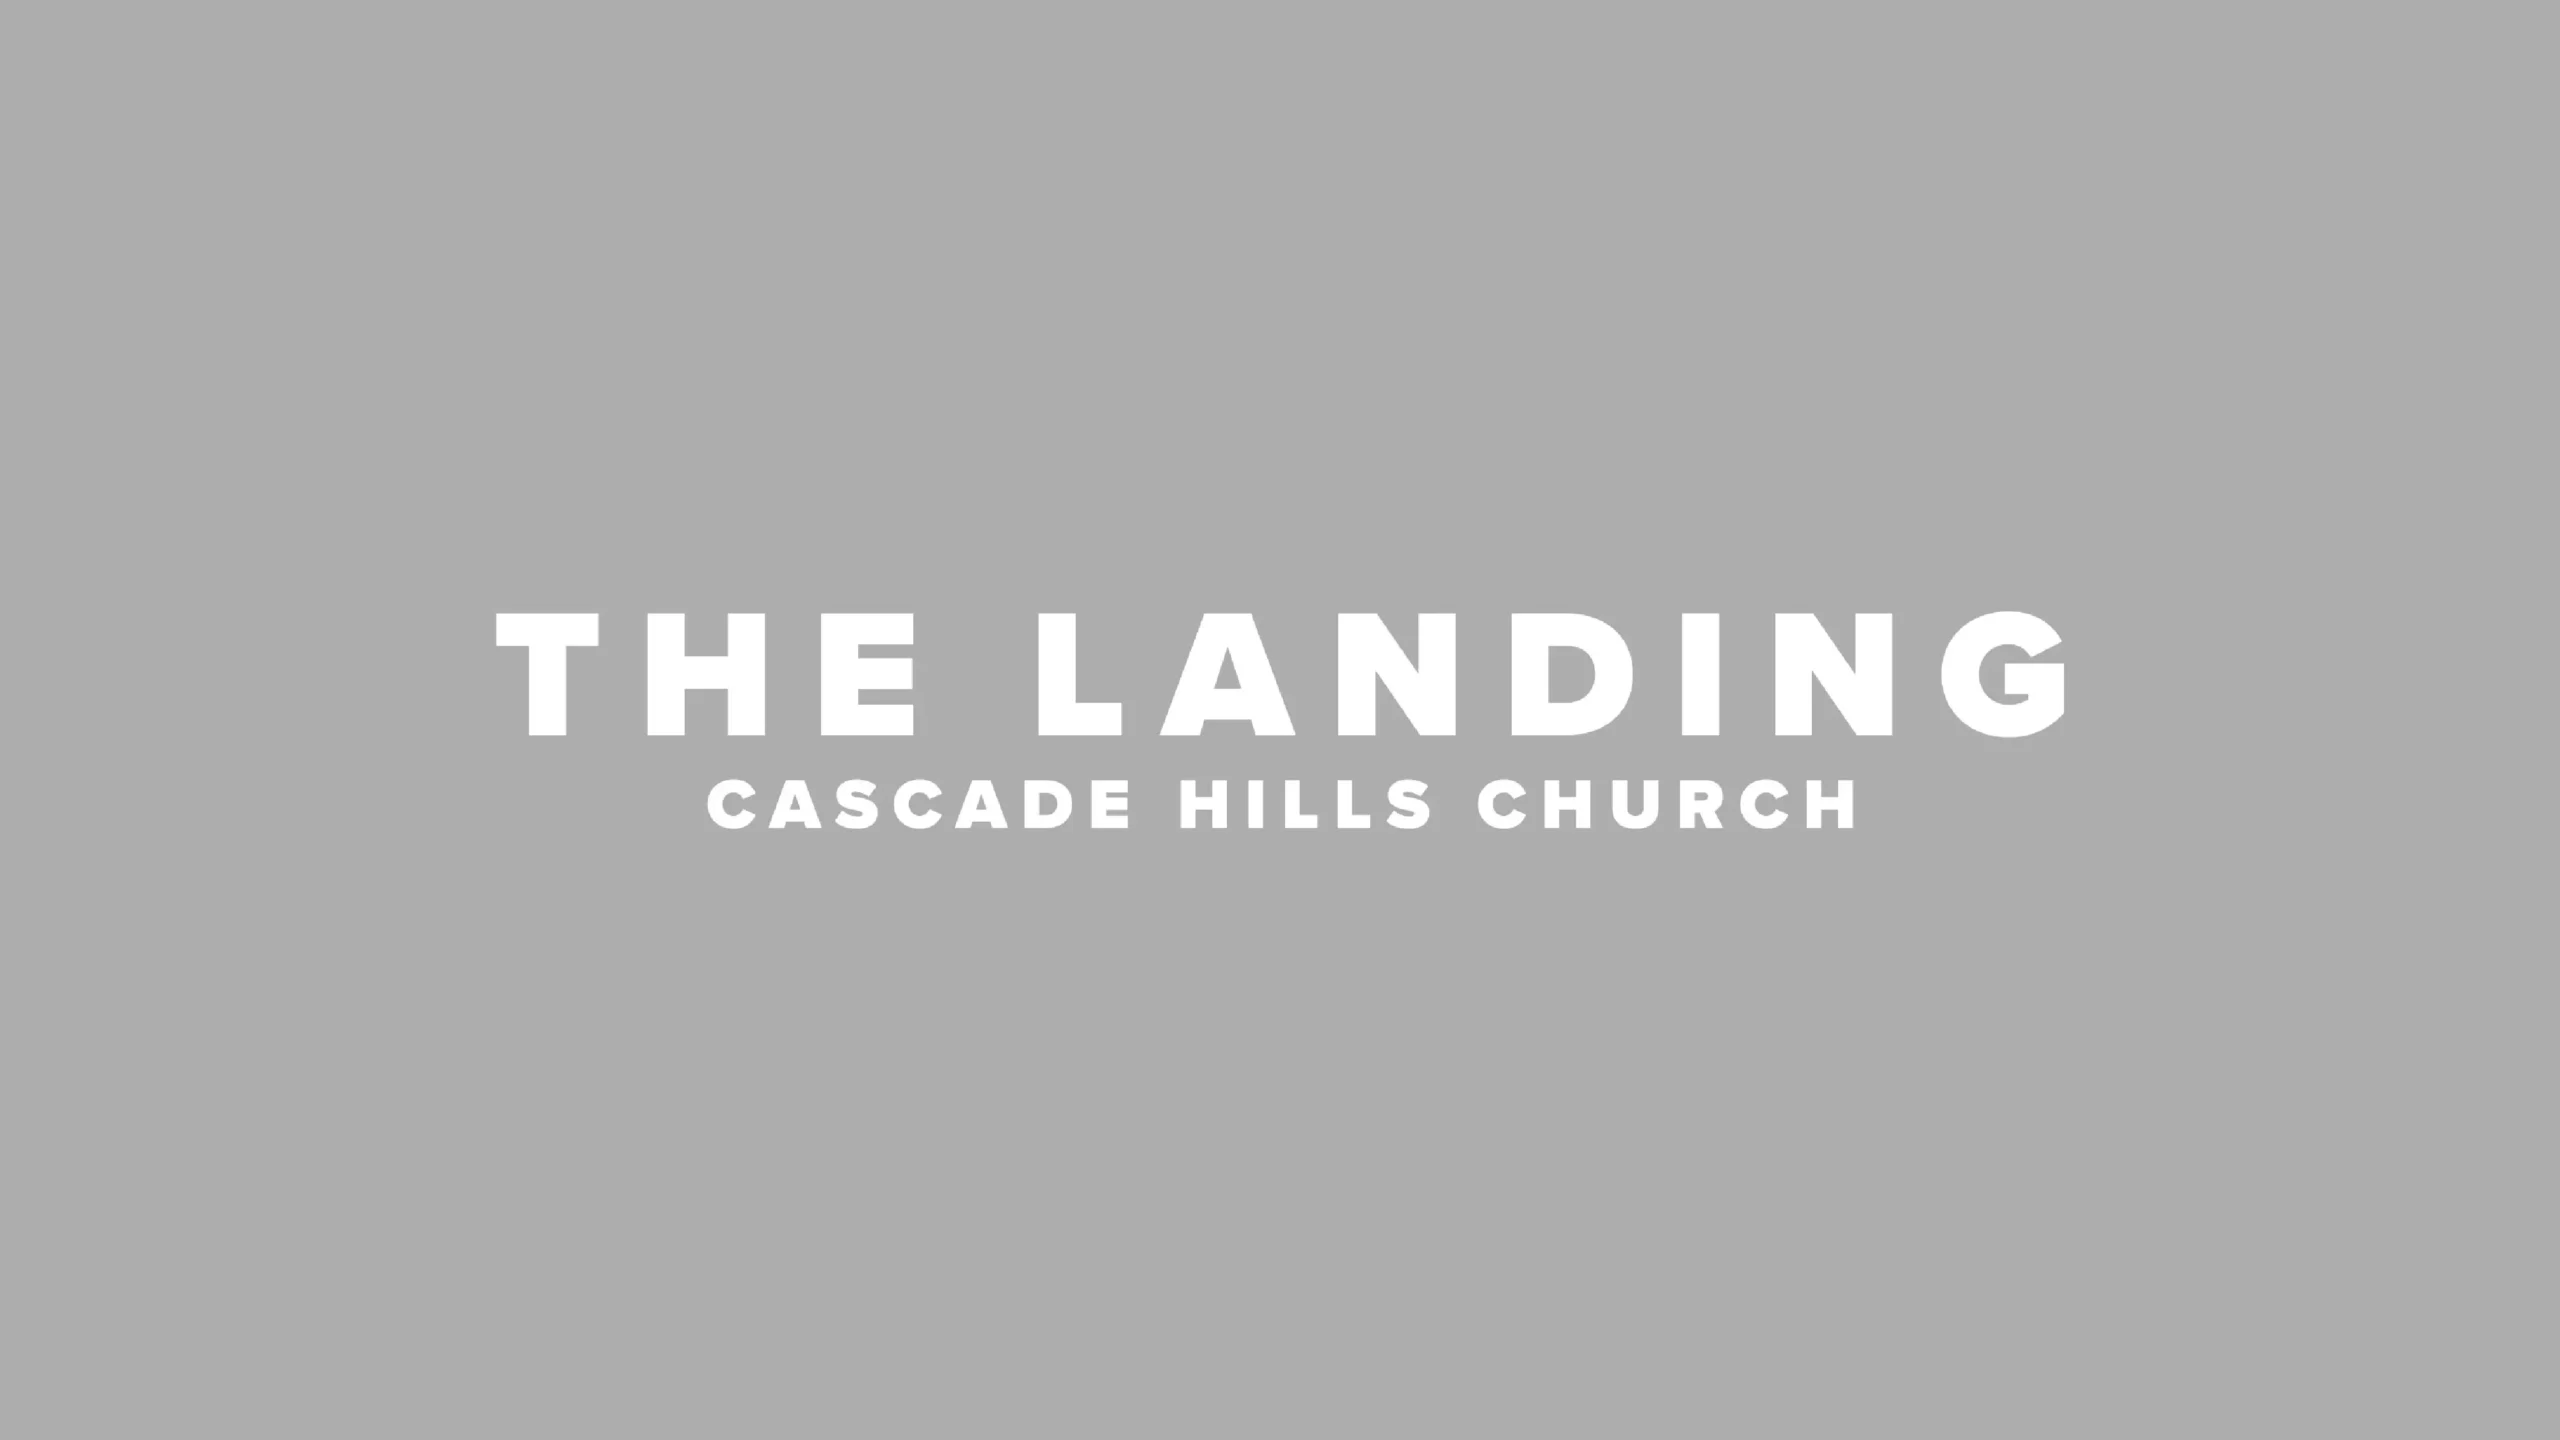 The Landing Logo